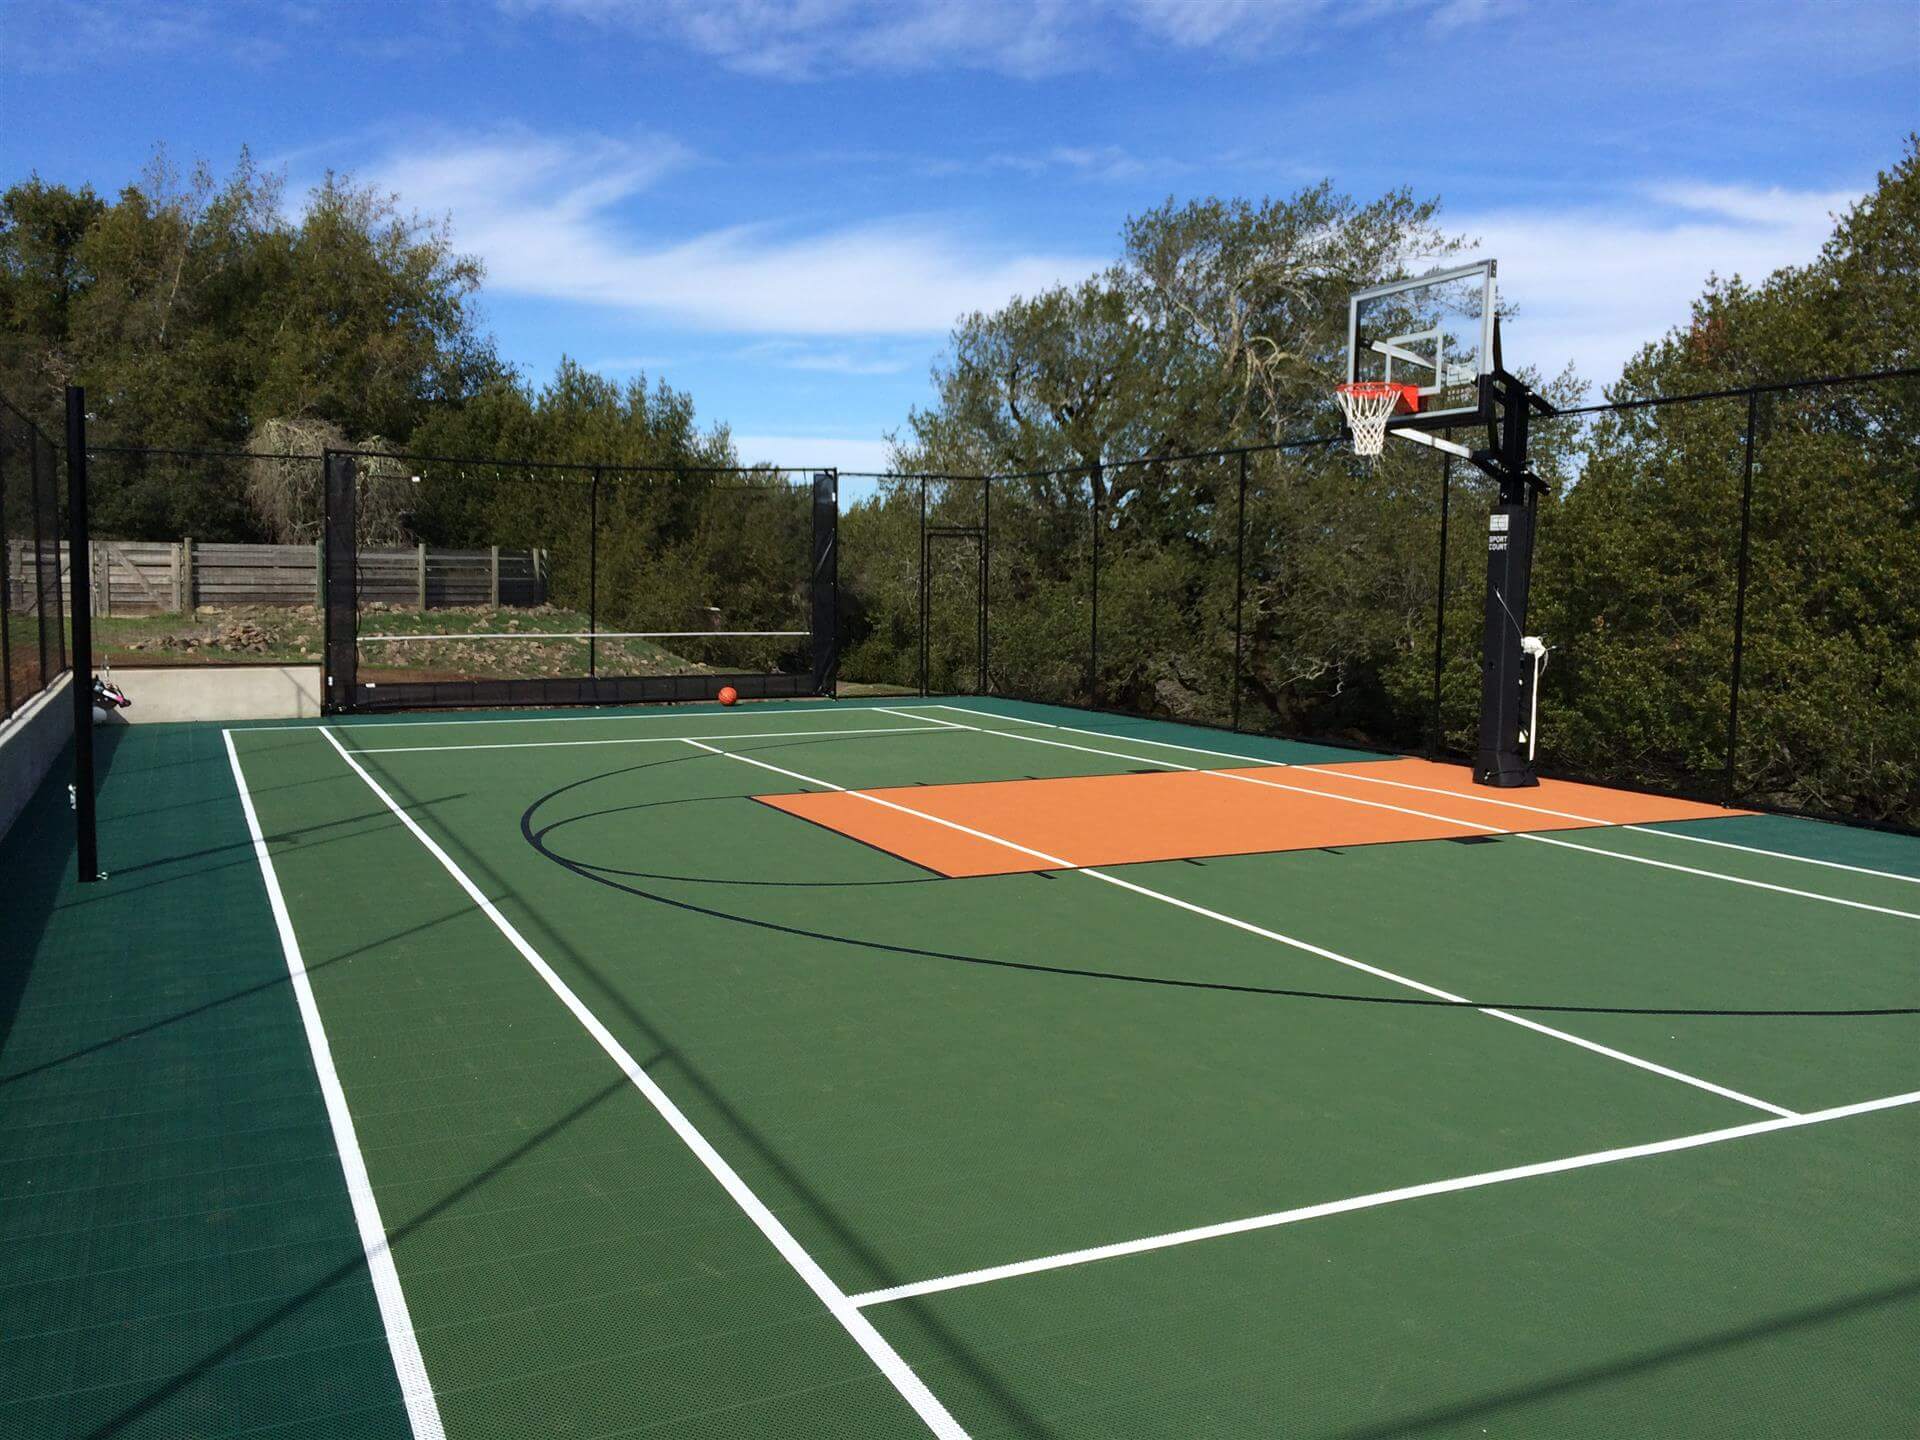 Backyard Sport Court Multi Game Outdoor Residential AllSport America